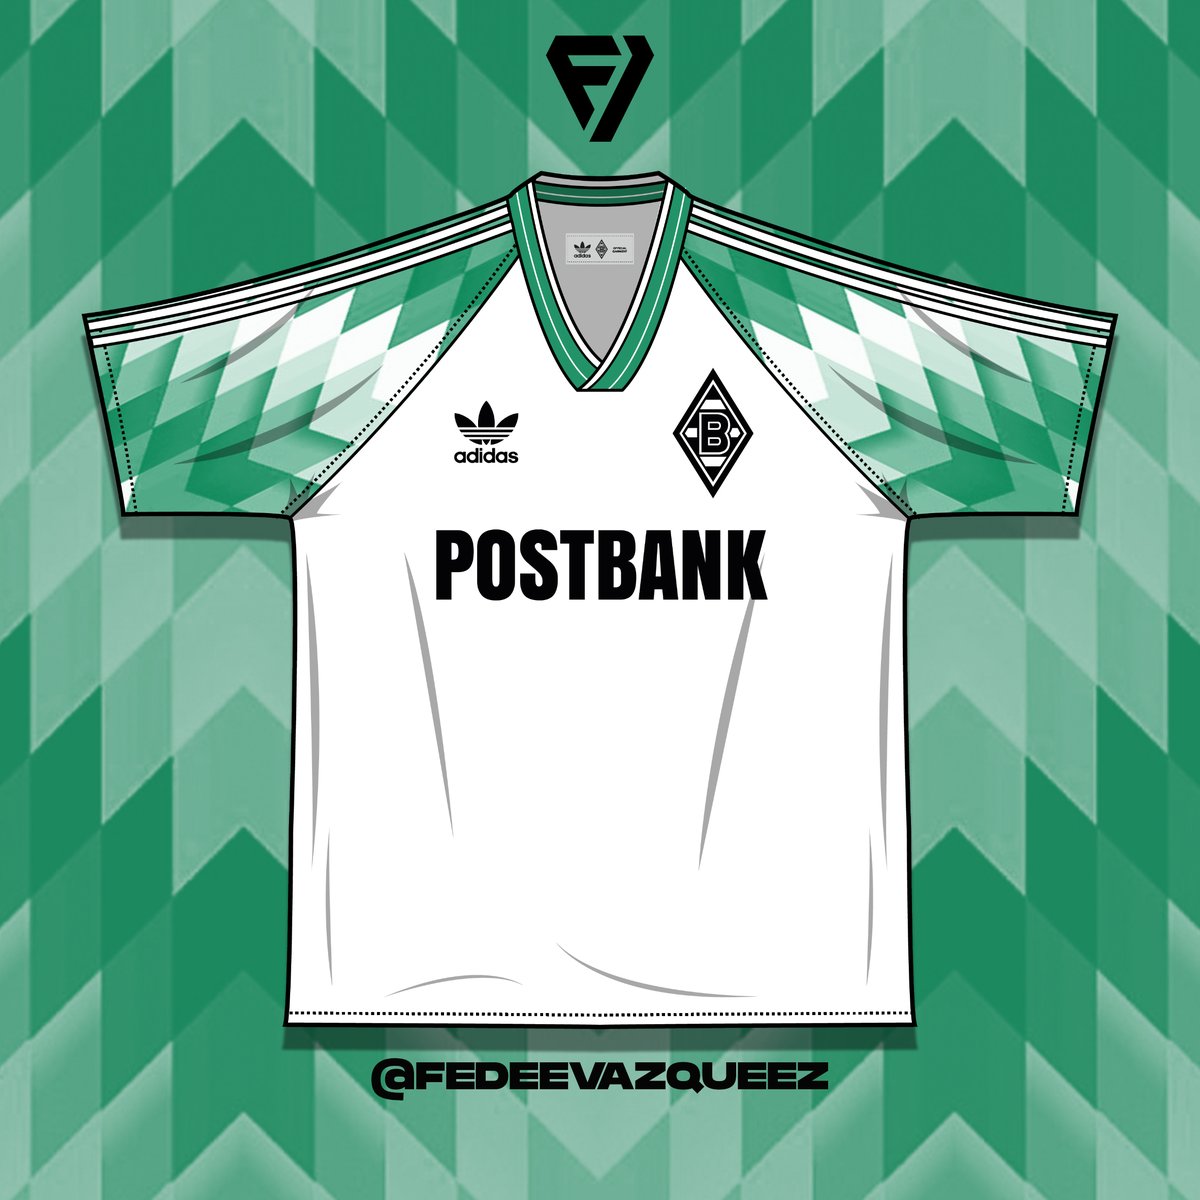 on Twitter: "Borussia Mönchengladbach x Adidas - 1990 template. @borussia_es @borussia @borussia_en @BorussiaM_arg Home - Away - Third https://t.co/jU13A765ak" / Twitter